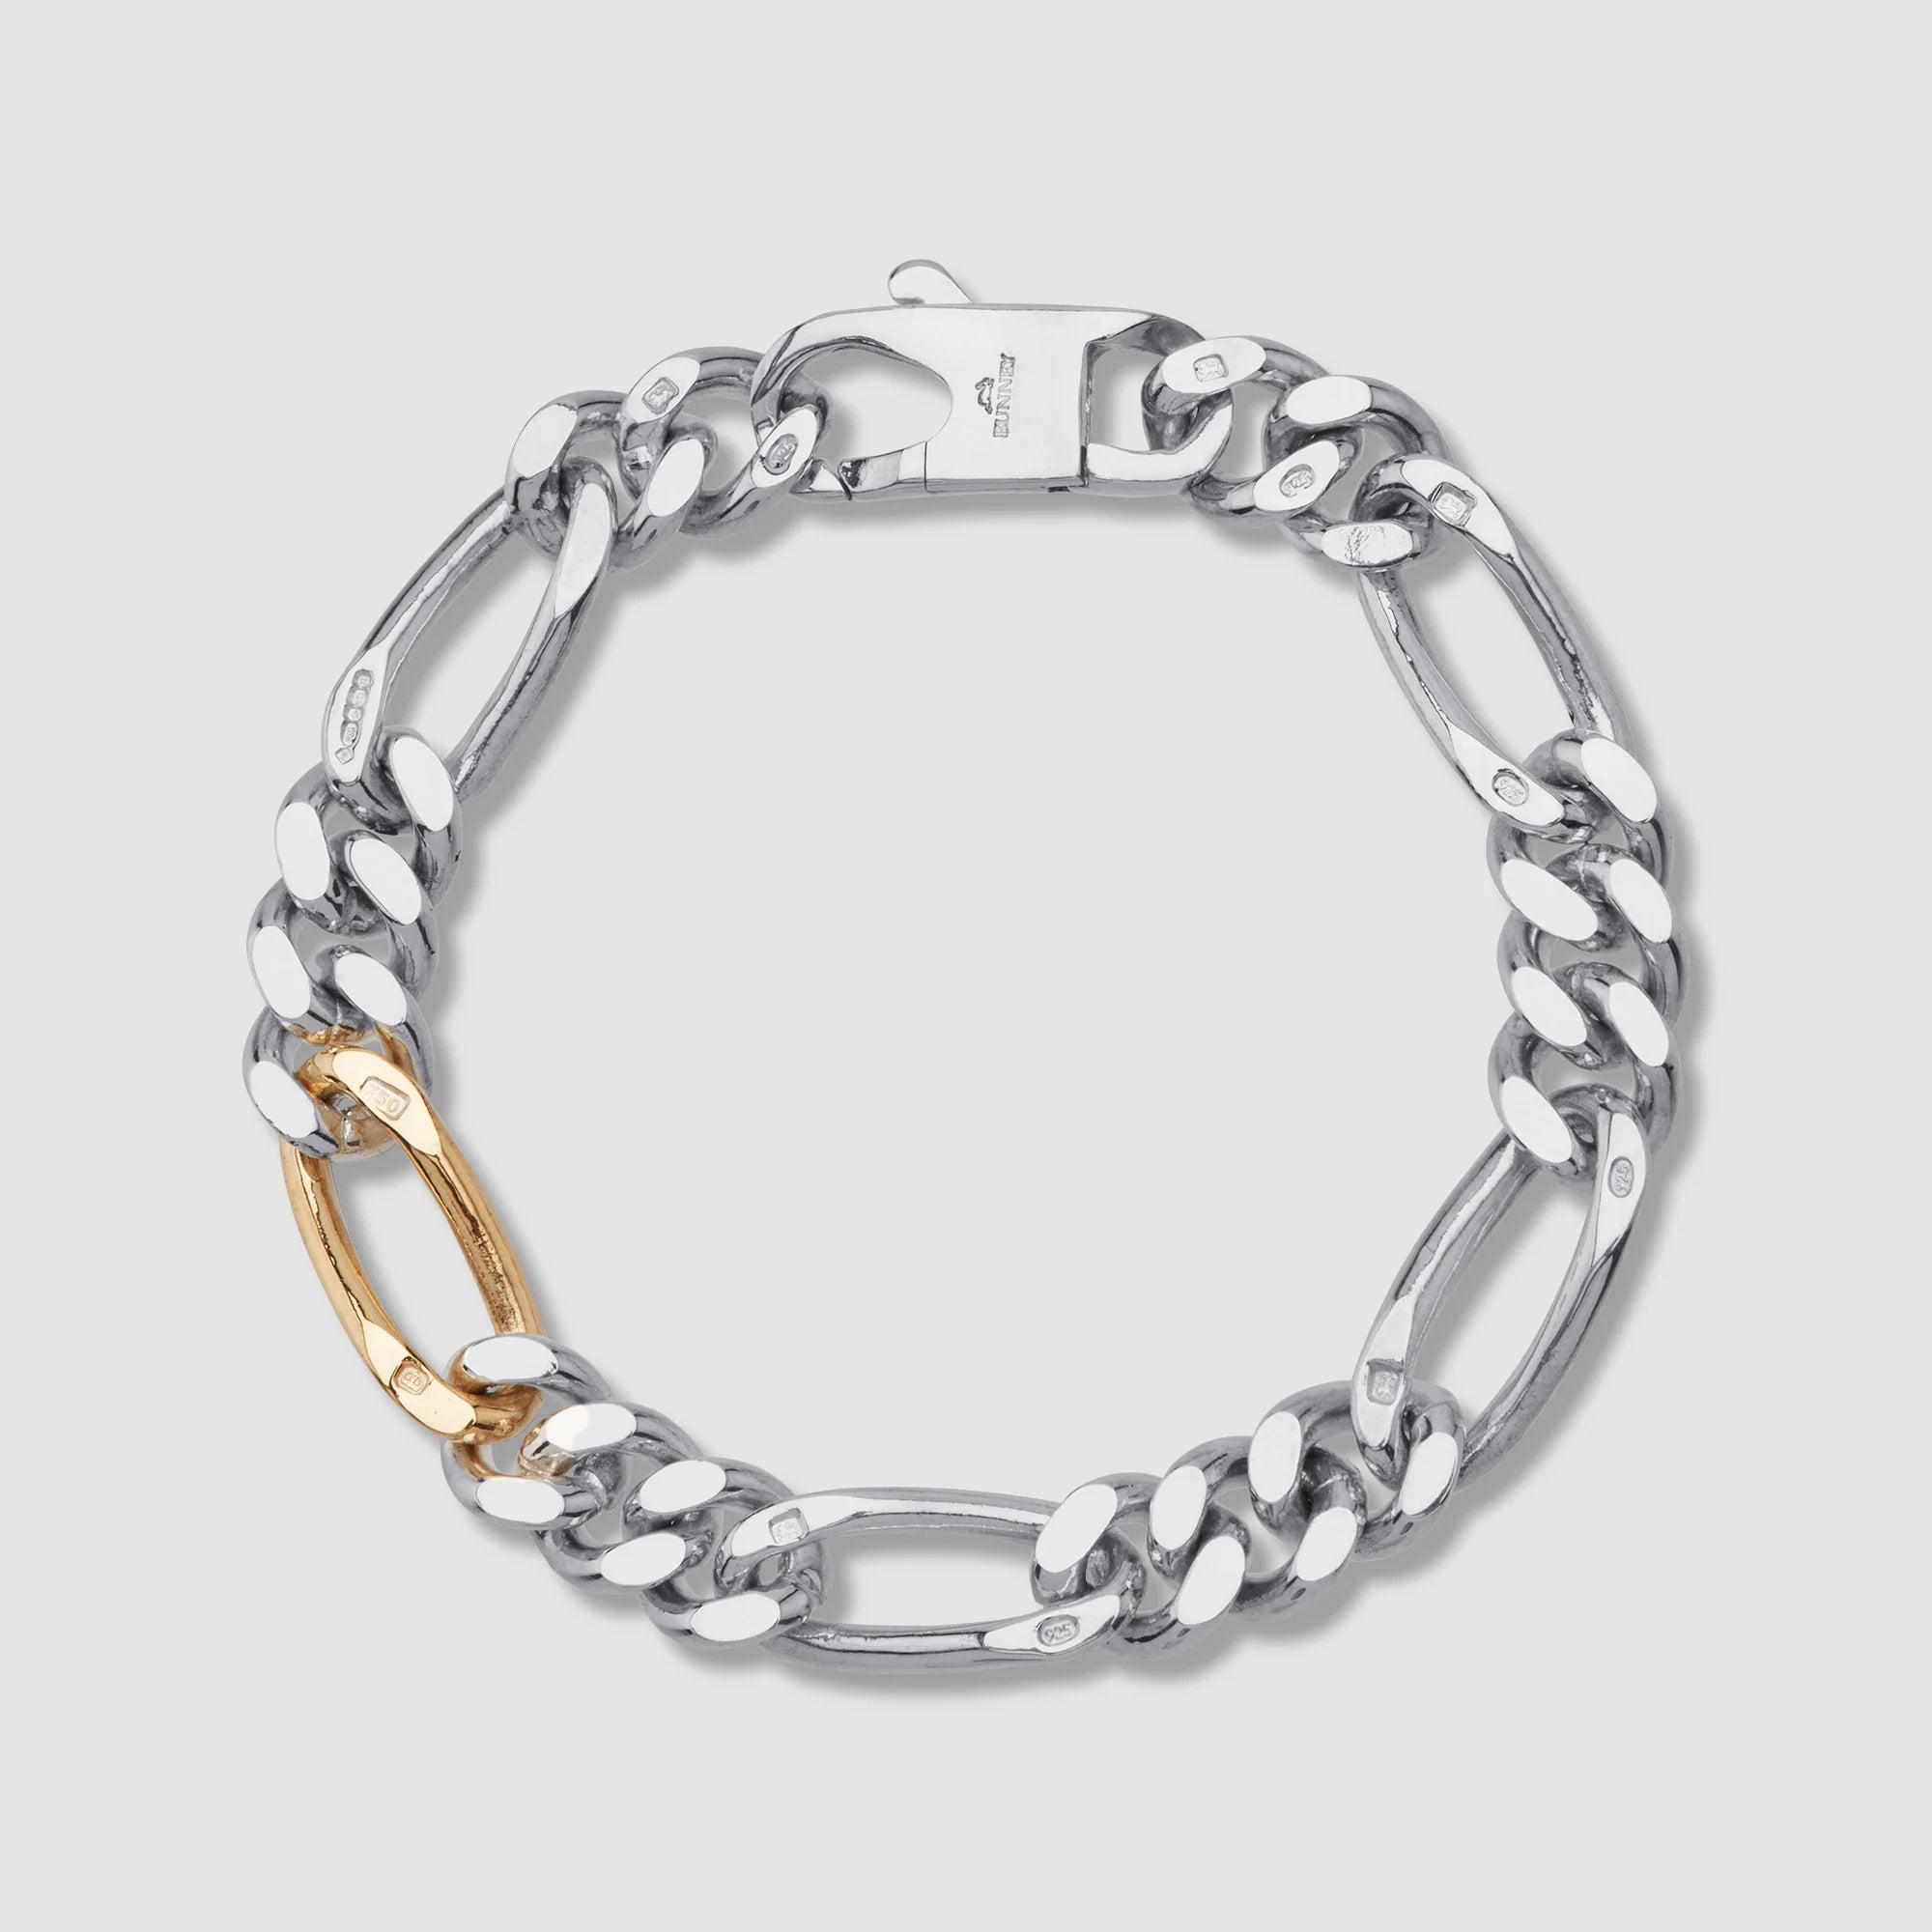 Bunney Silver Figaro Bracelet with Gold Link by BUNNEY